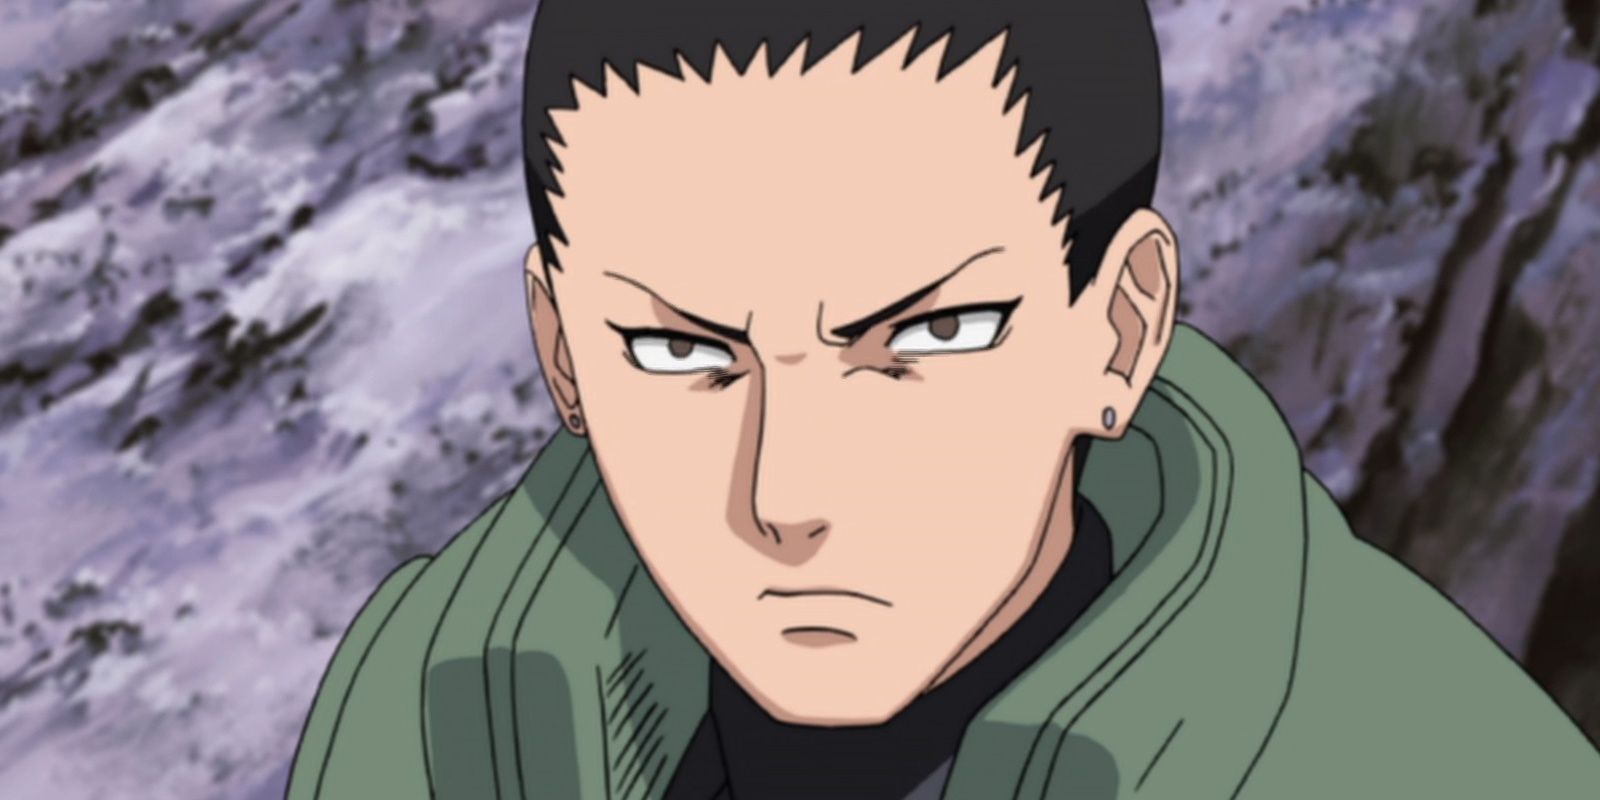 Shikamaru looking serious in Naruto.